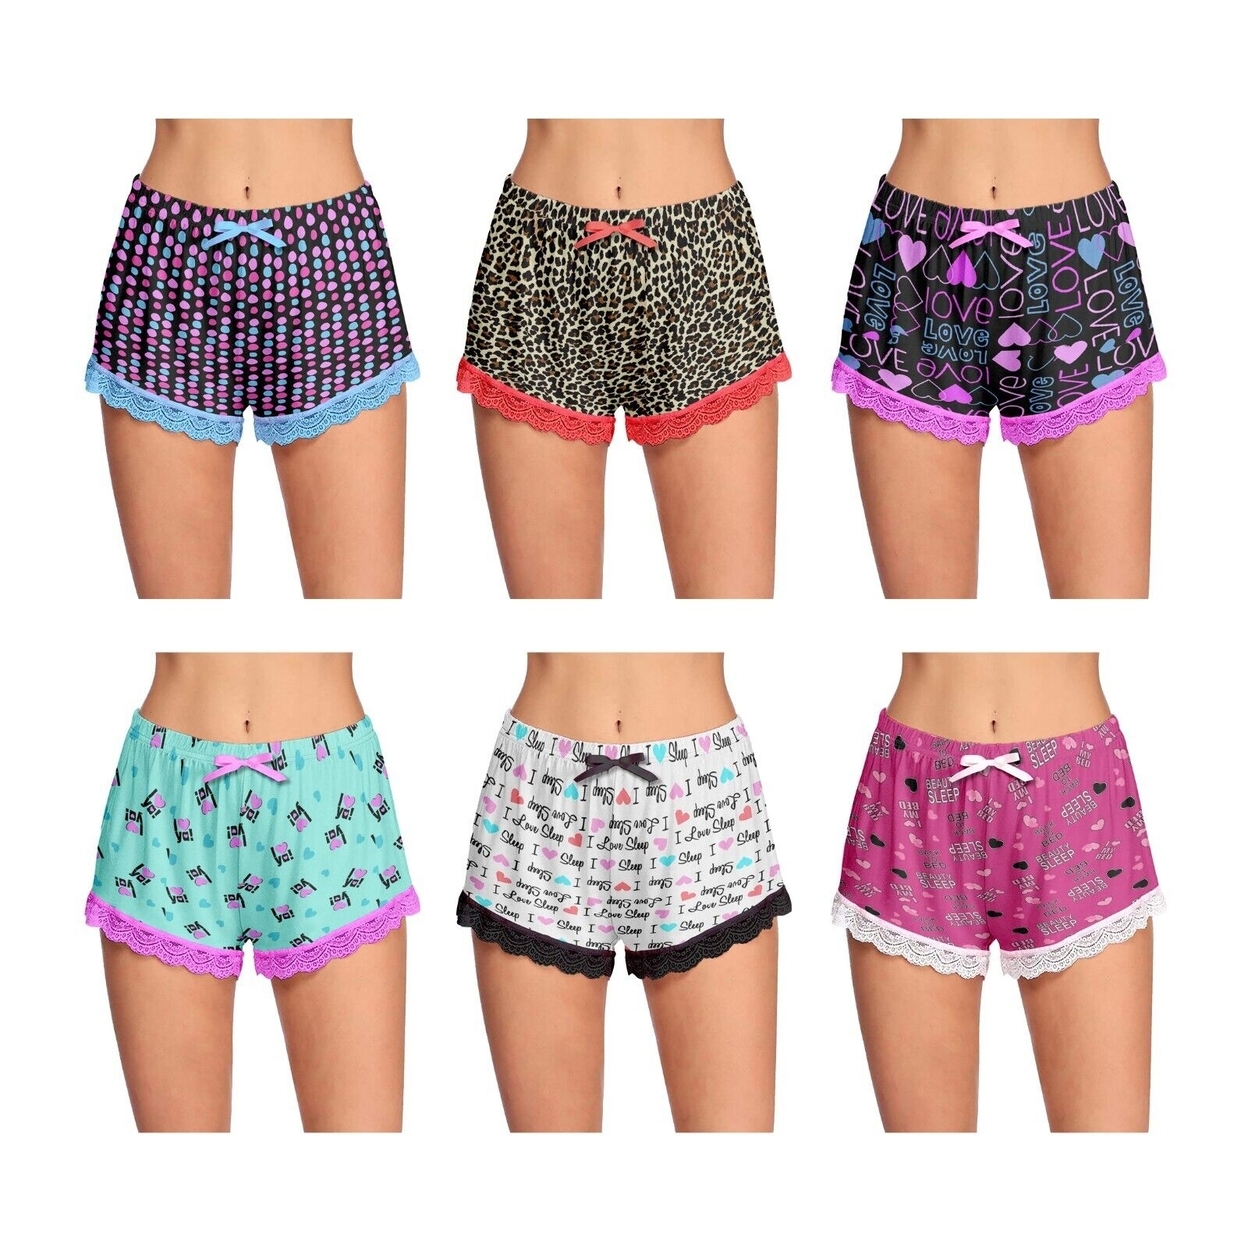 3-Pack: Women's Ultra-Soft Cozy Fun Printed Lace Trim Pajama Lounge Shorts - Small, Animal